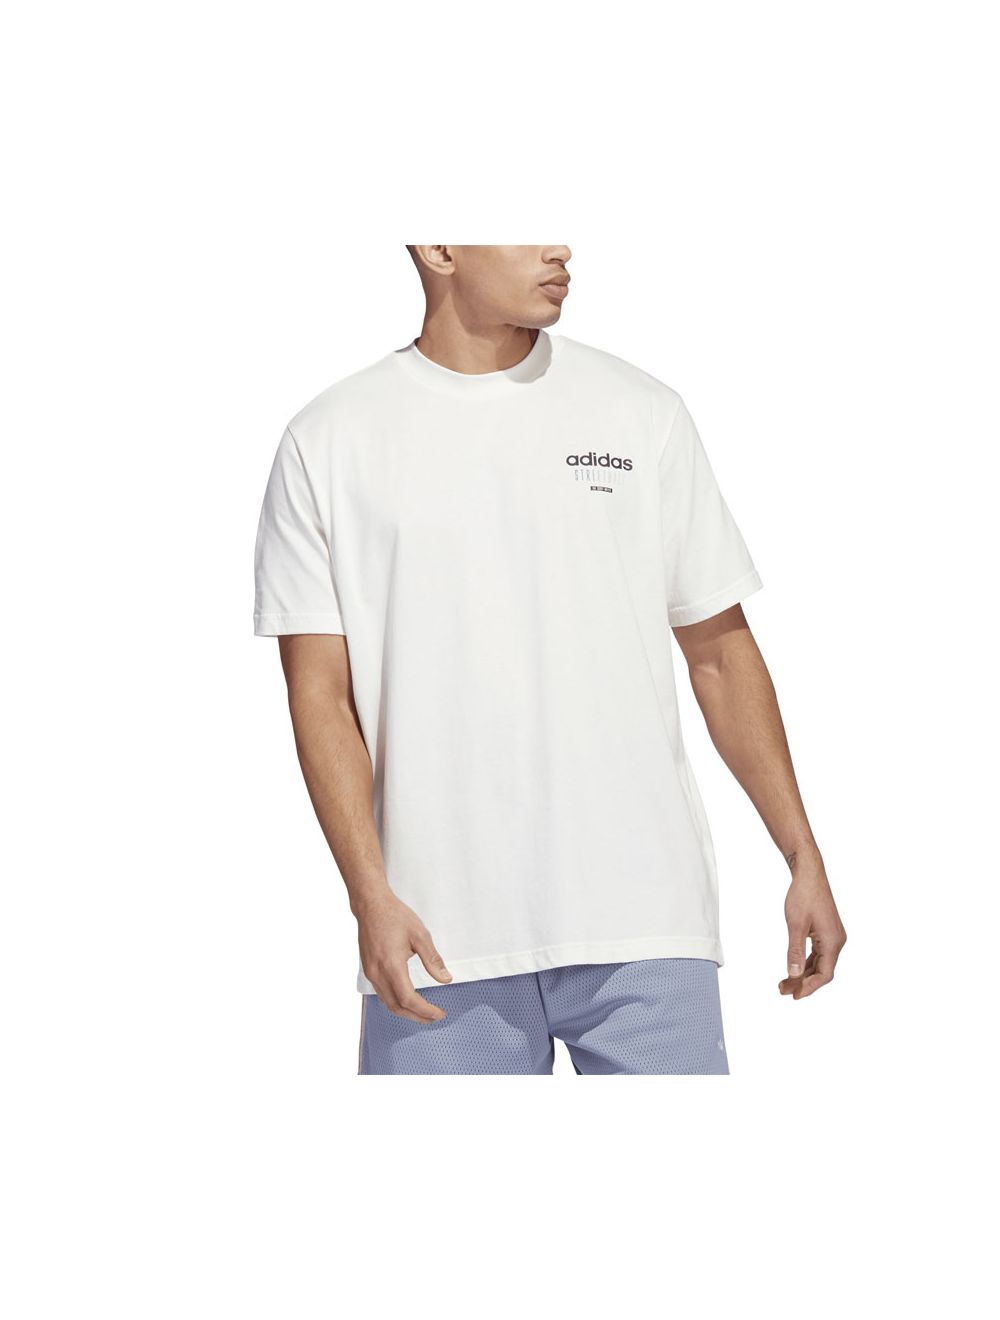 adidas Originals Basketball Streetball Graphic White Mens T-shirt